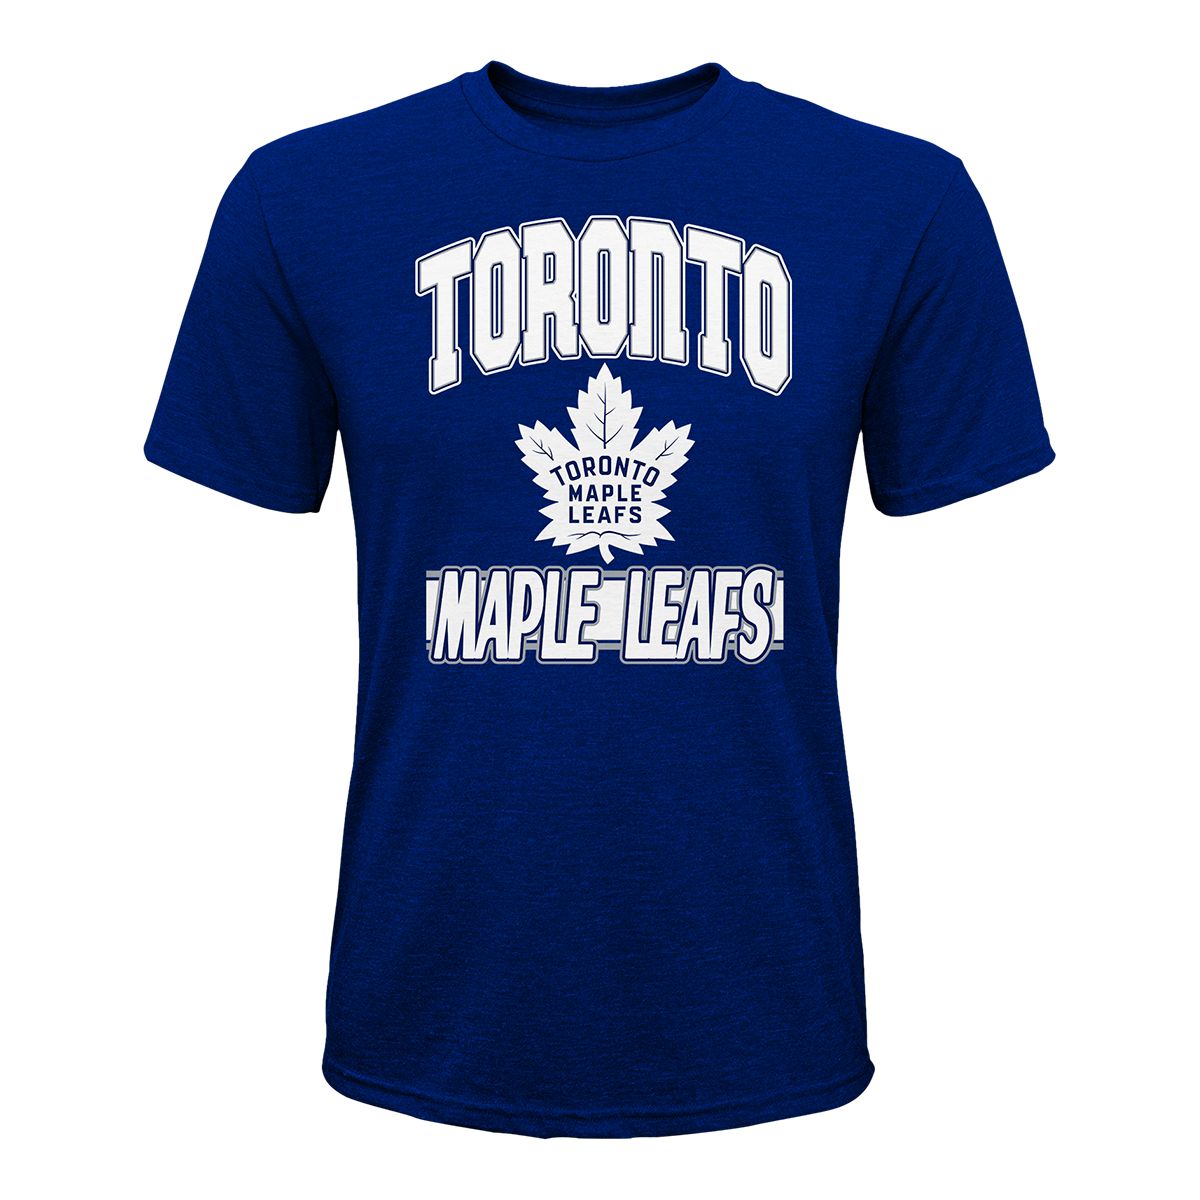 Outerstuff NHL Youth (8-20) Toronto Mapleleafs Swim Shorts, Blue